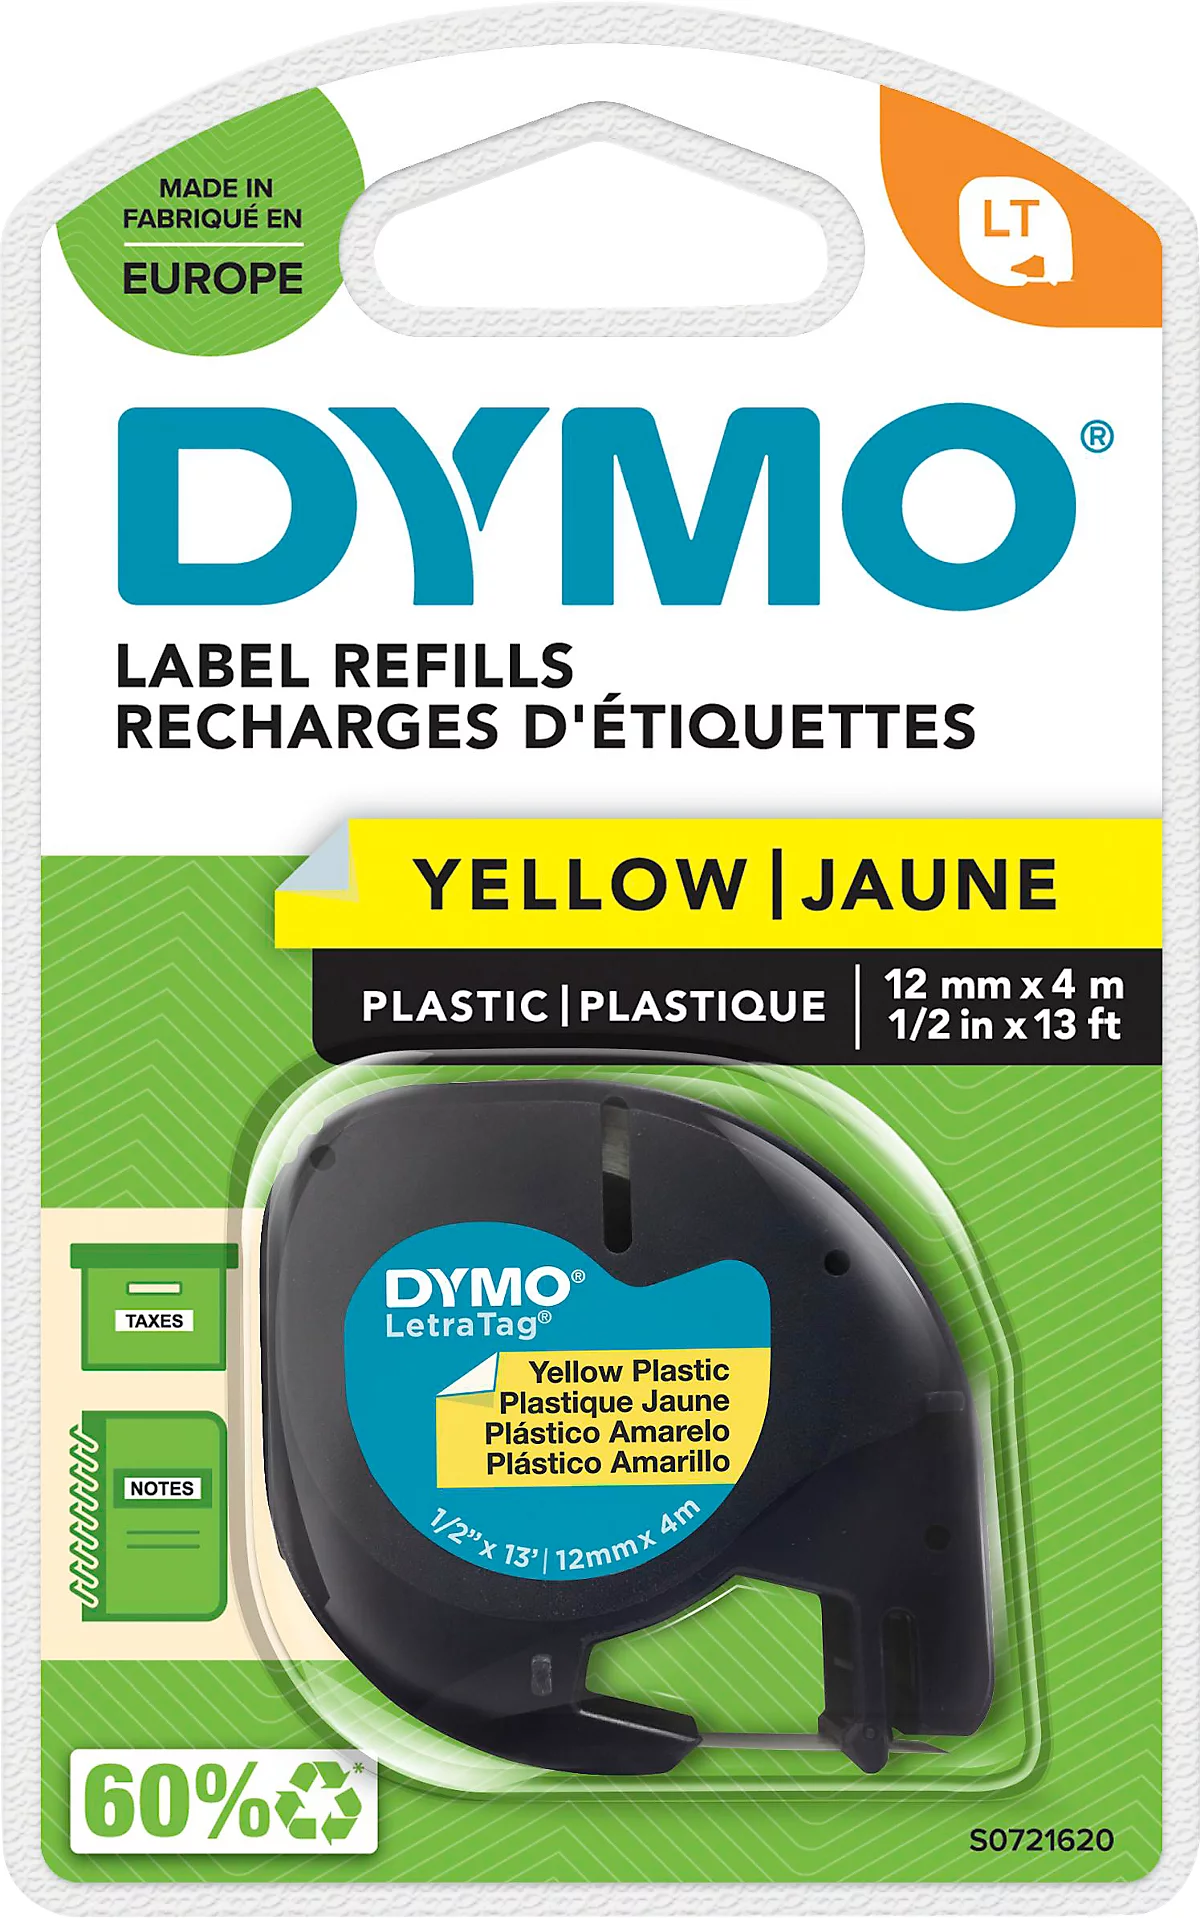 Casete de cinta para DYMO® Letra Tag, plástico, 12 mm, amarillo